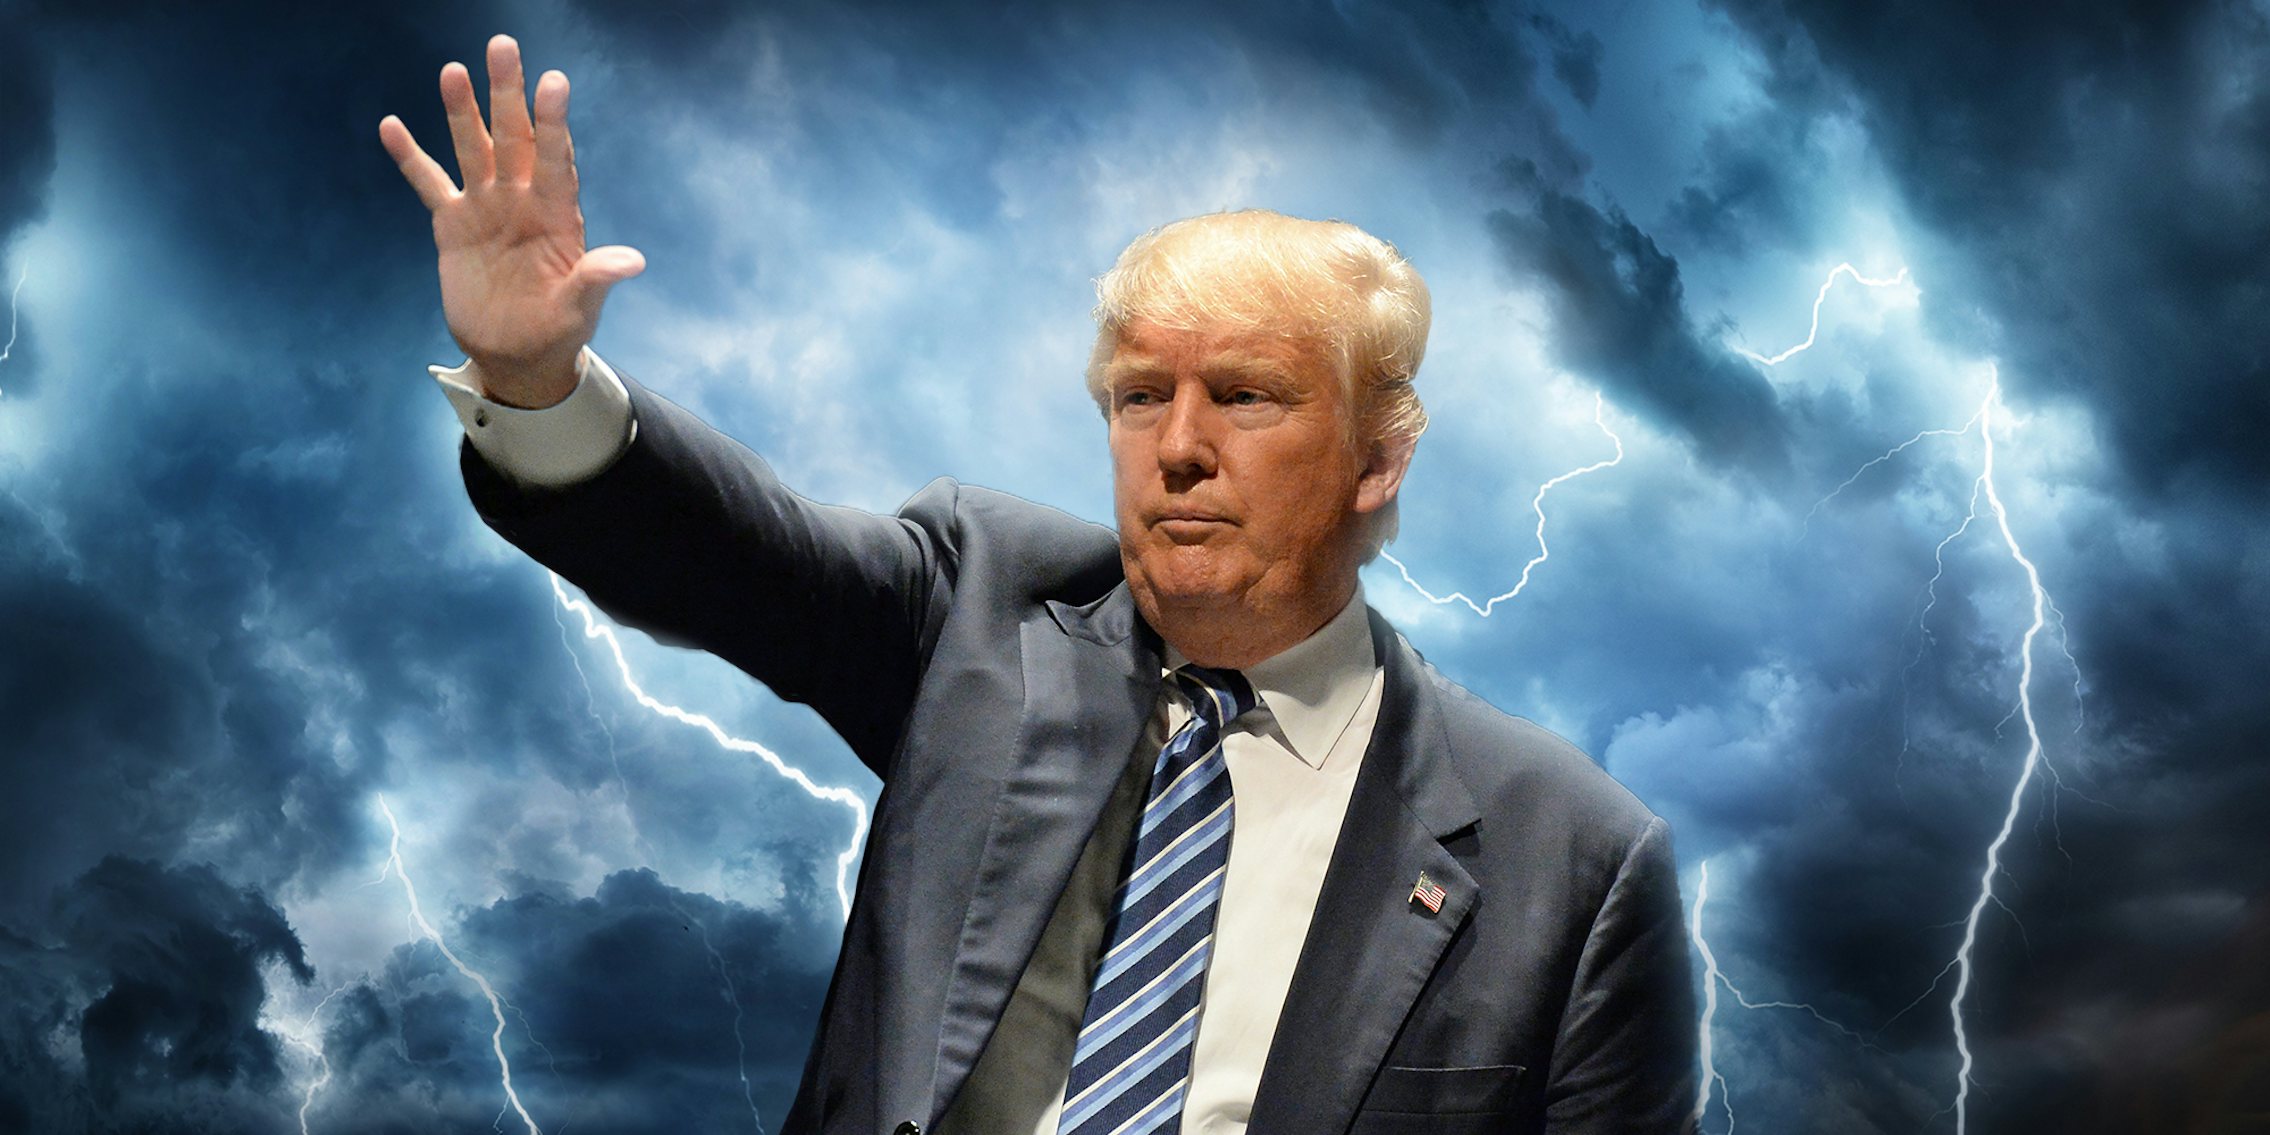 Trump raising hand with lightning background